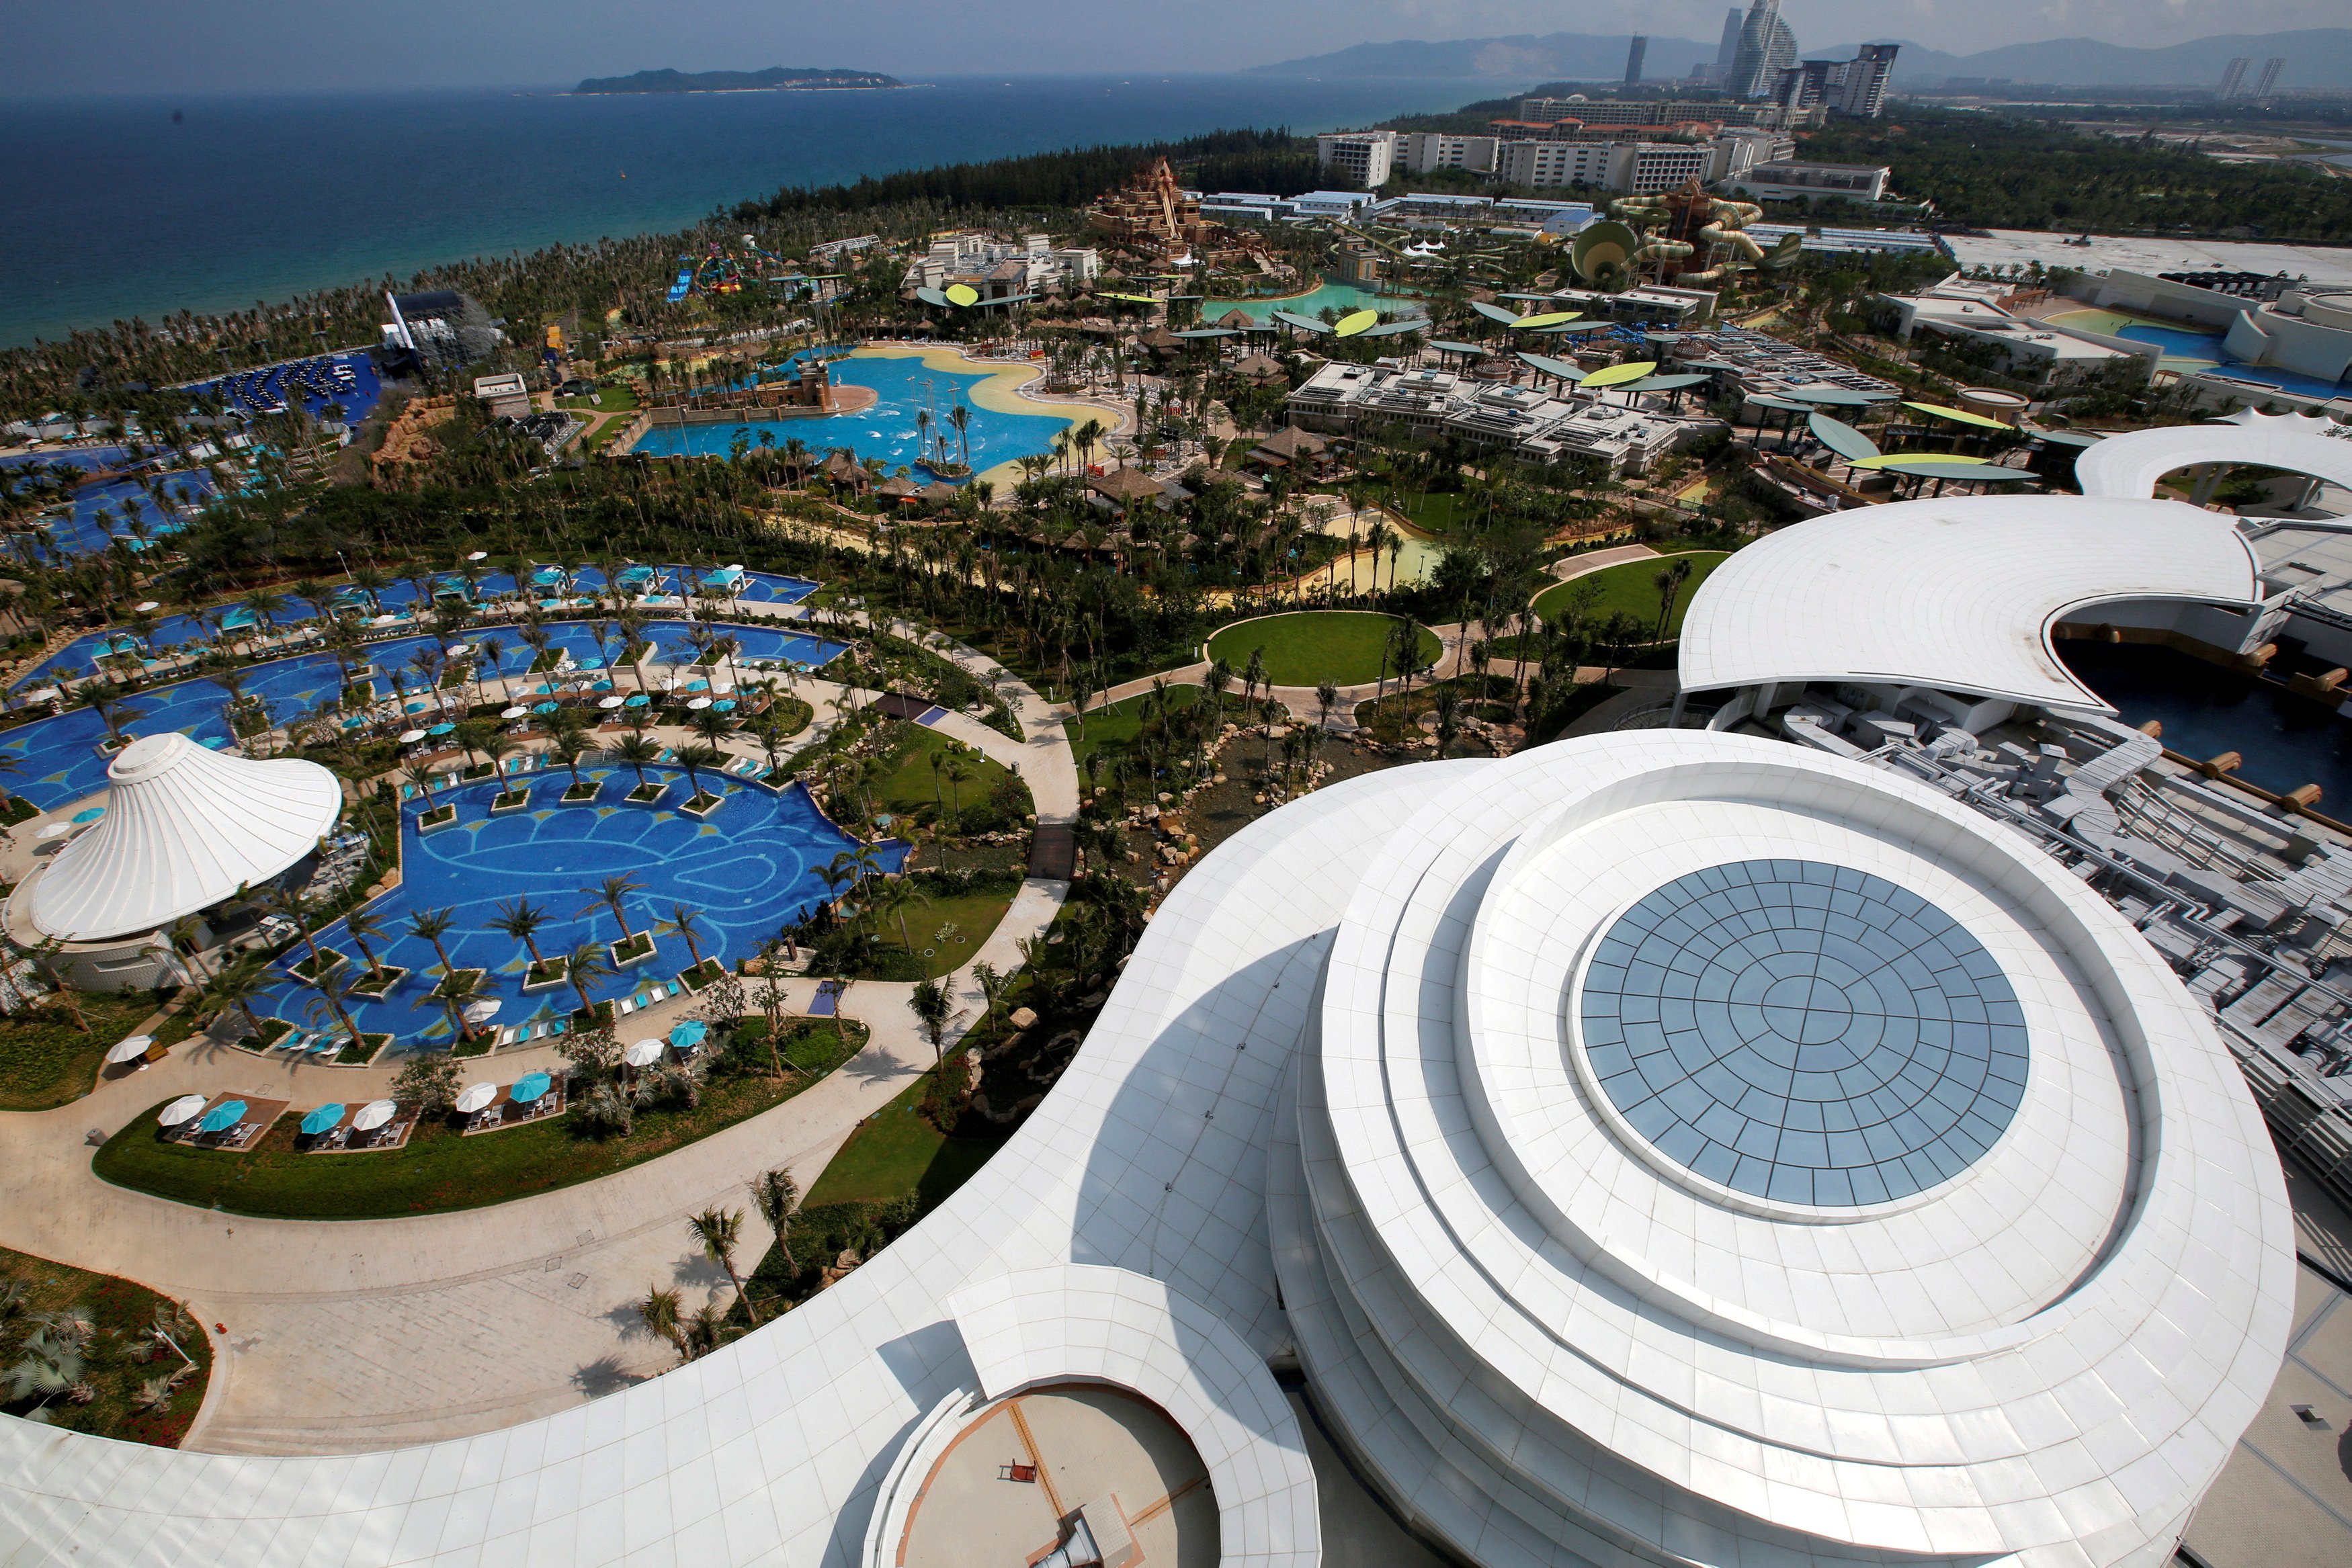 General view of recreational facilities located in front of Atlantis Sanya hotel in Sanya, Hainan province, China April 26, 2018. Photo: Reuters